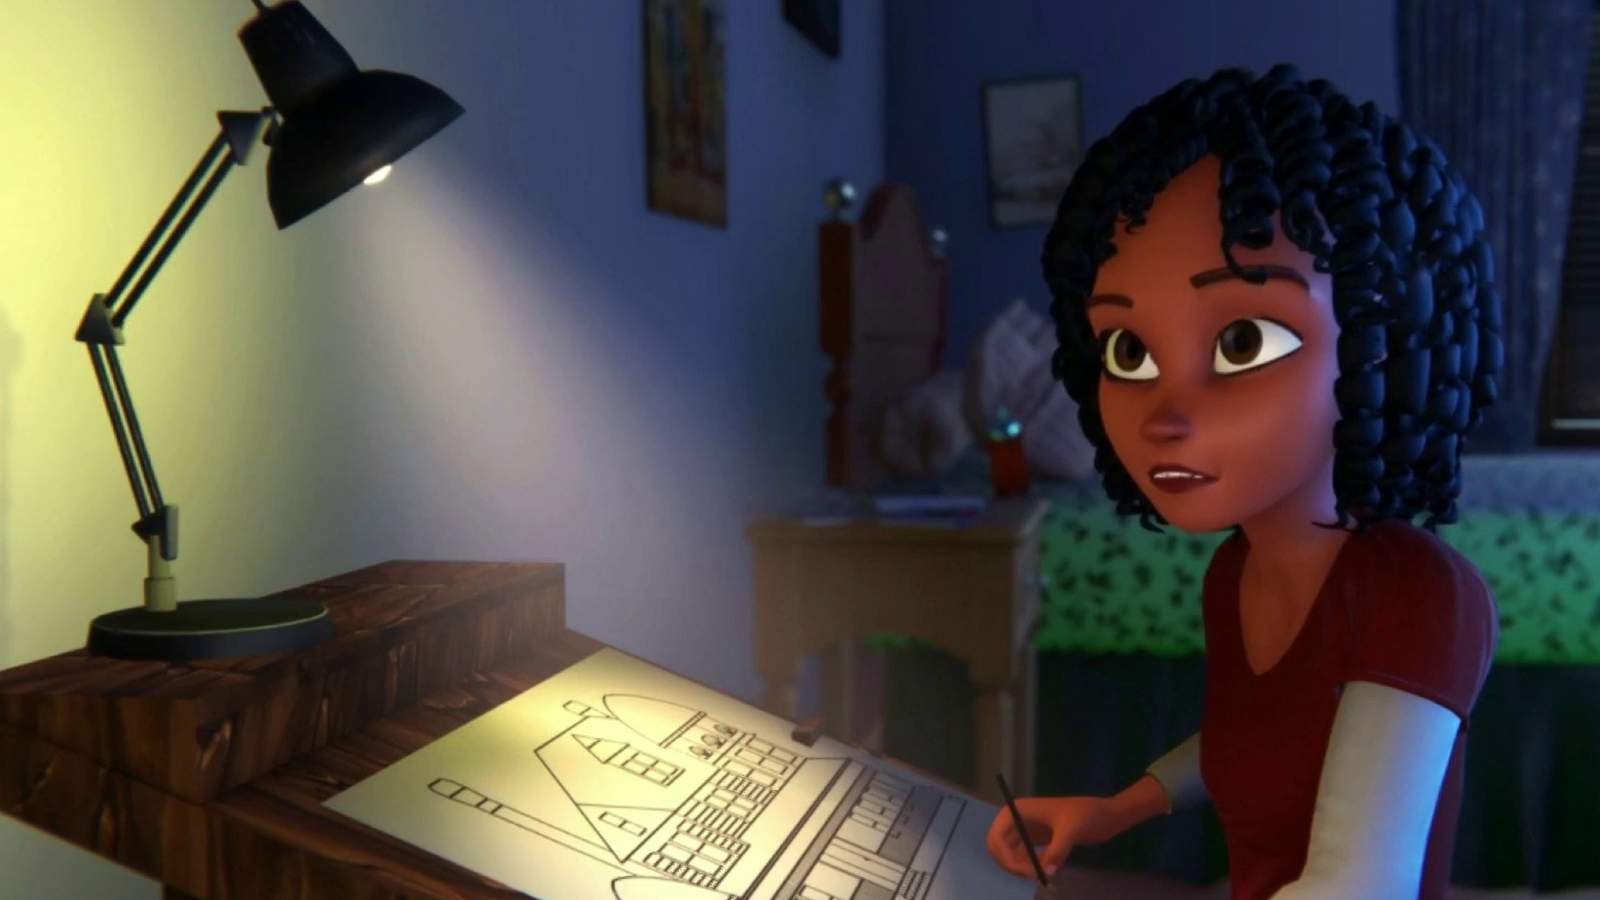 Black filmmaker, 14, creates short film inspired by Michelle Obama speech